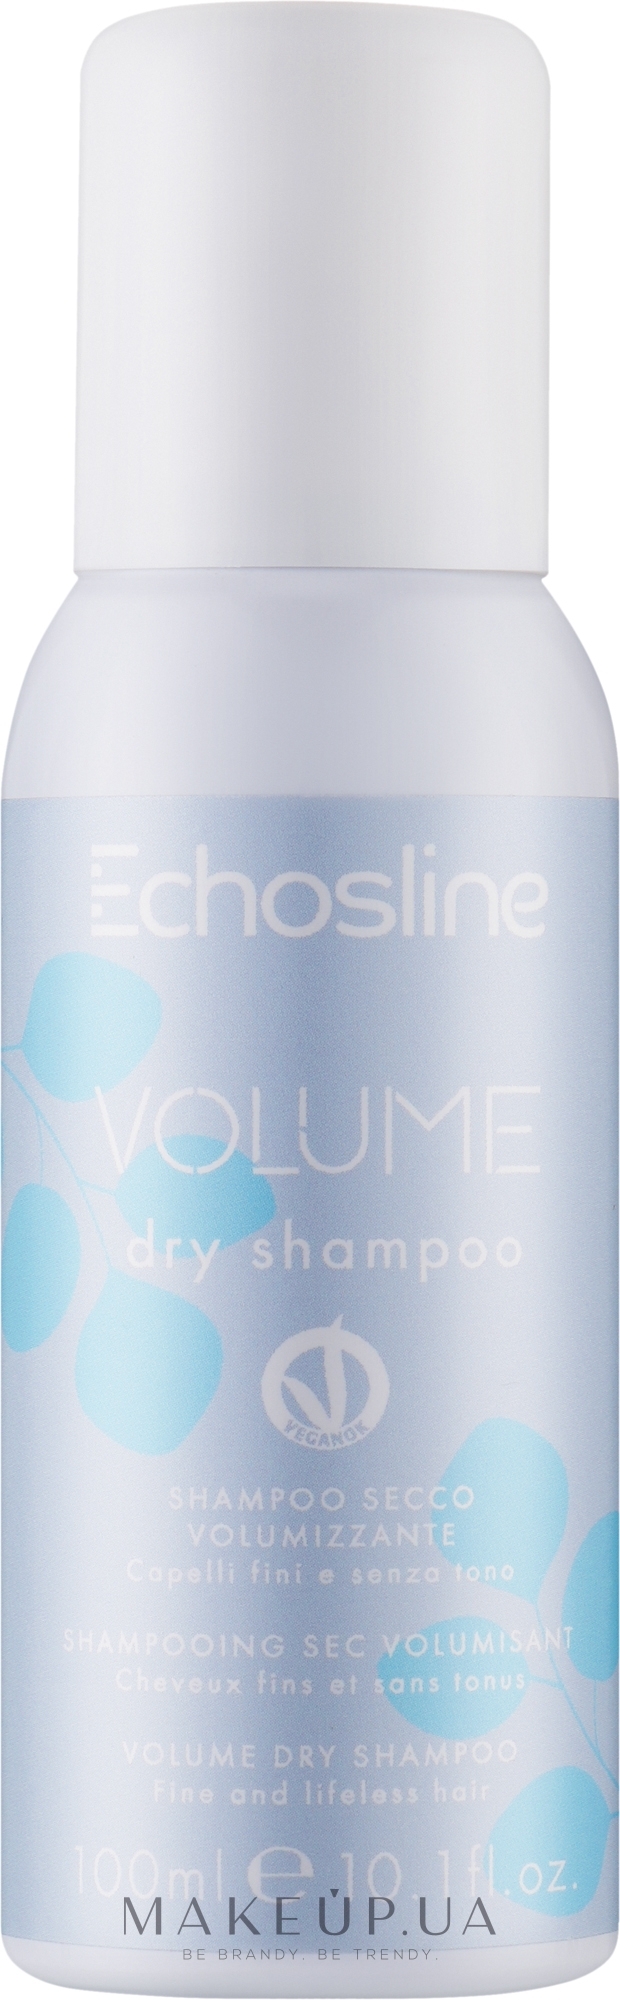 Сухой шампунь для объема волос - Echosline Volume Dry Shampoo — фото 100ml